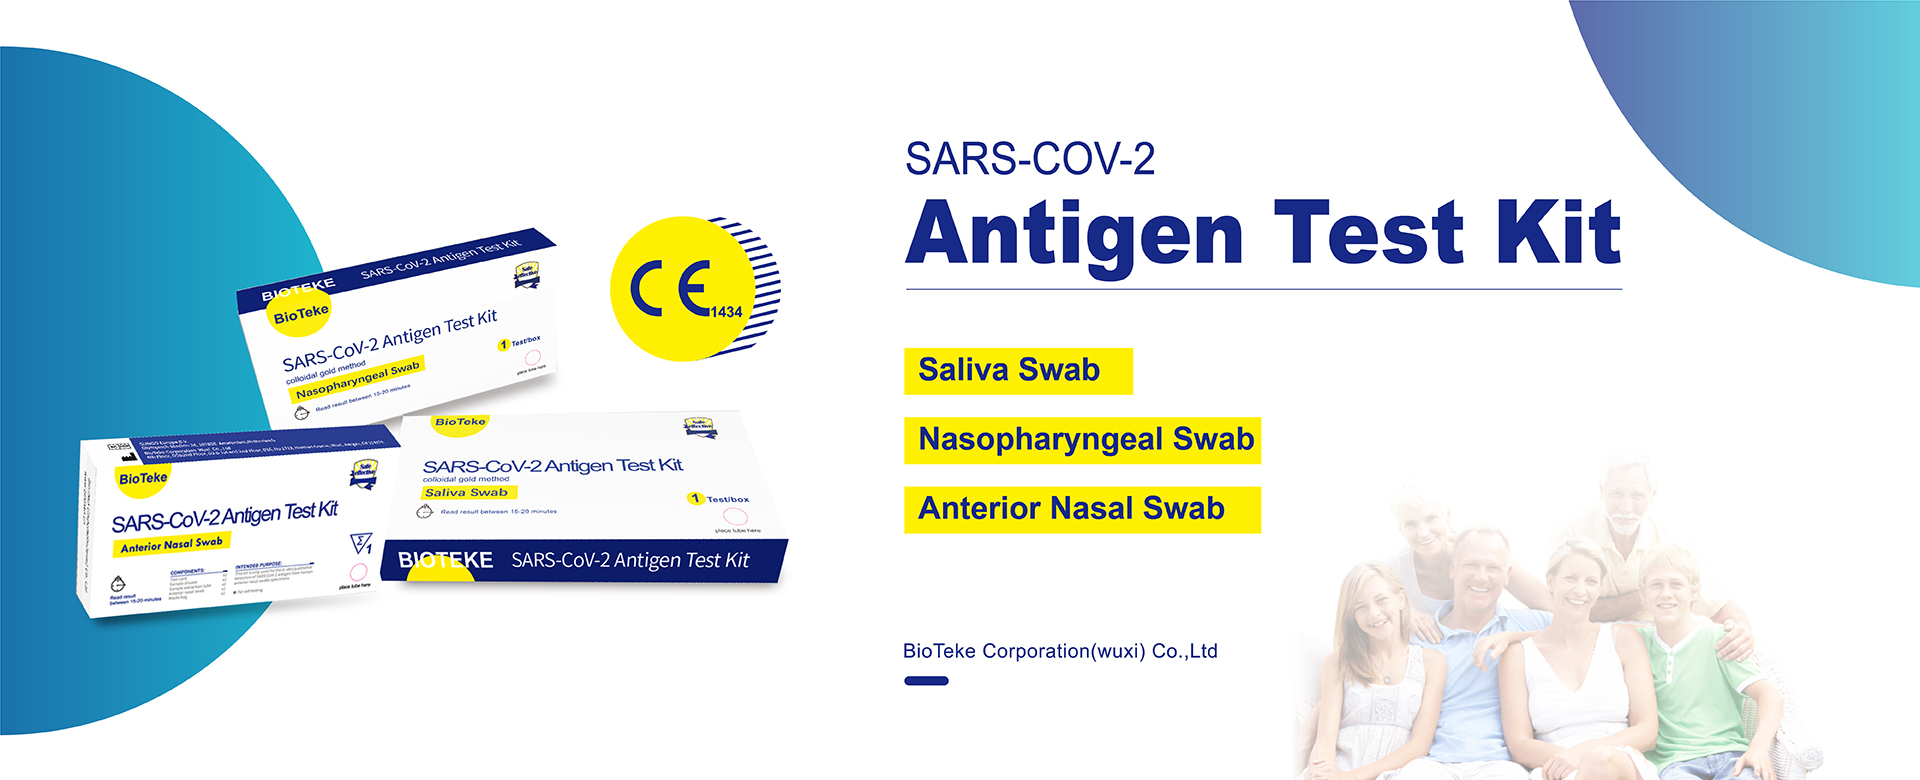 SARS-CoV-2 antigen test